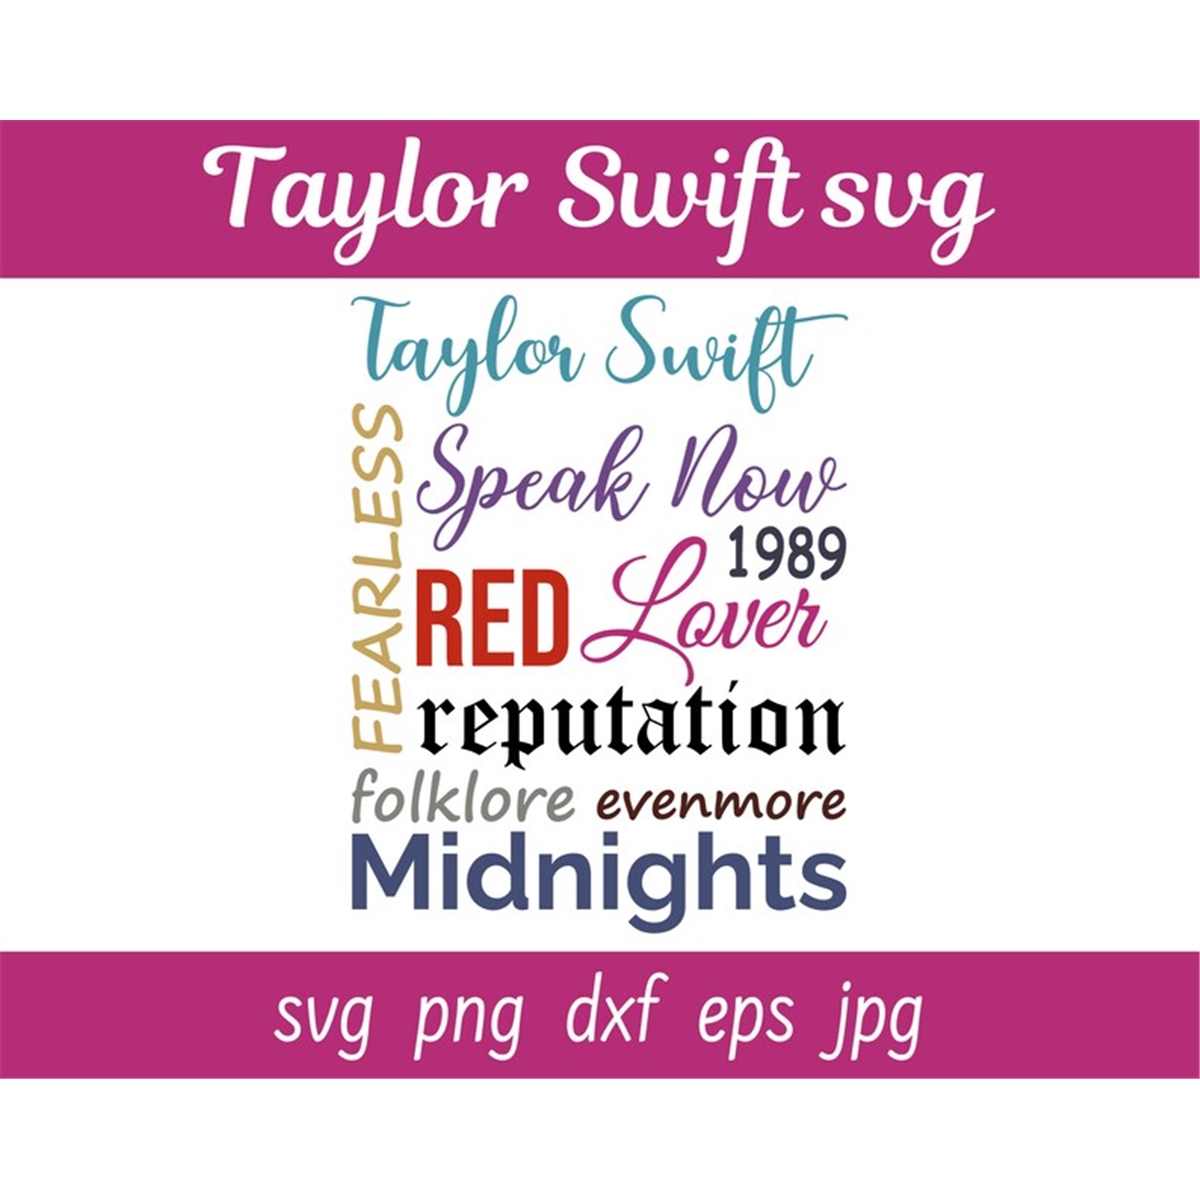 Taylor Swift Svg, Taylor Swift Png, Taylor Swift Poster, Taylor Swift ...